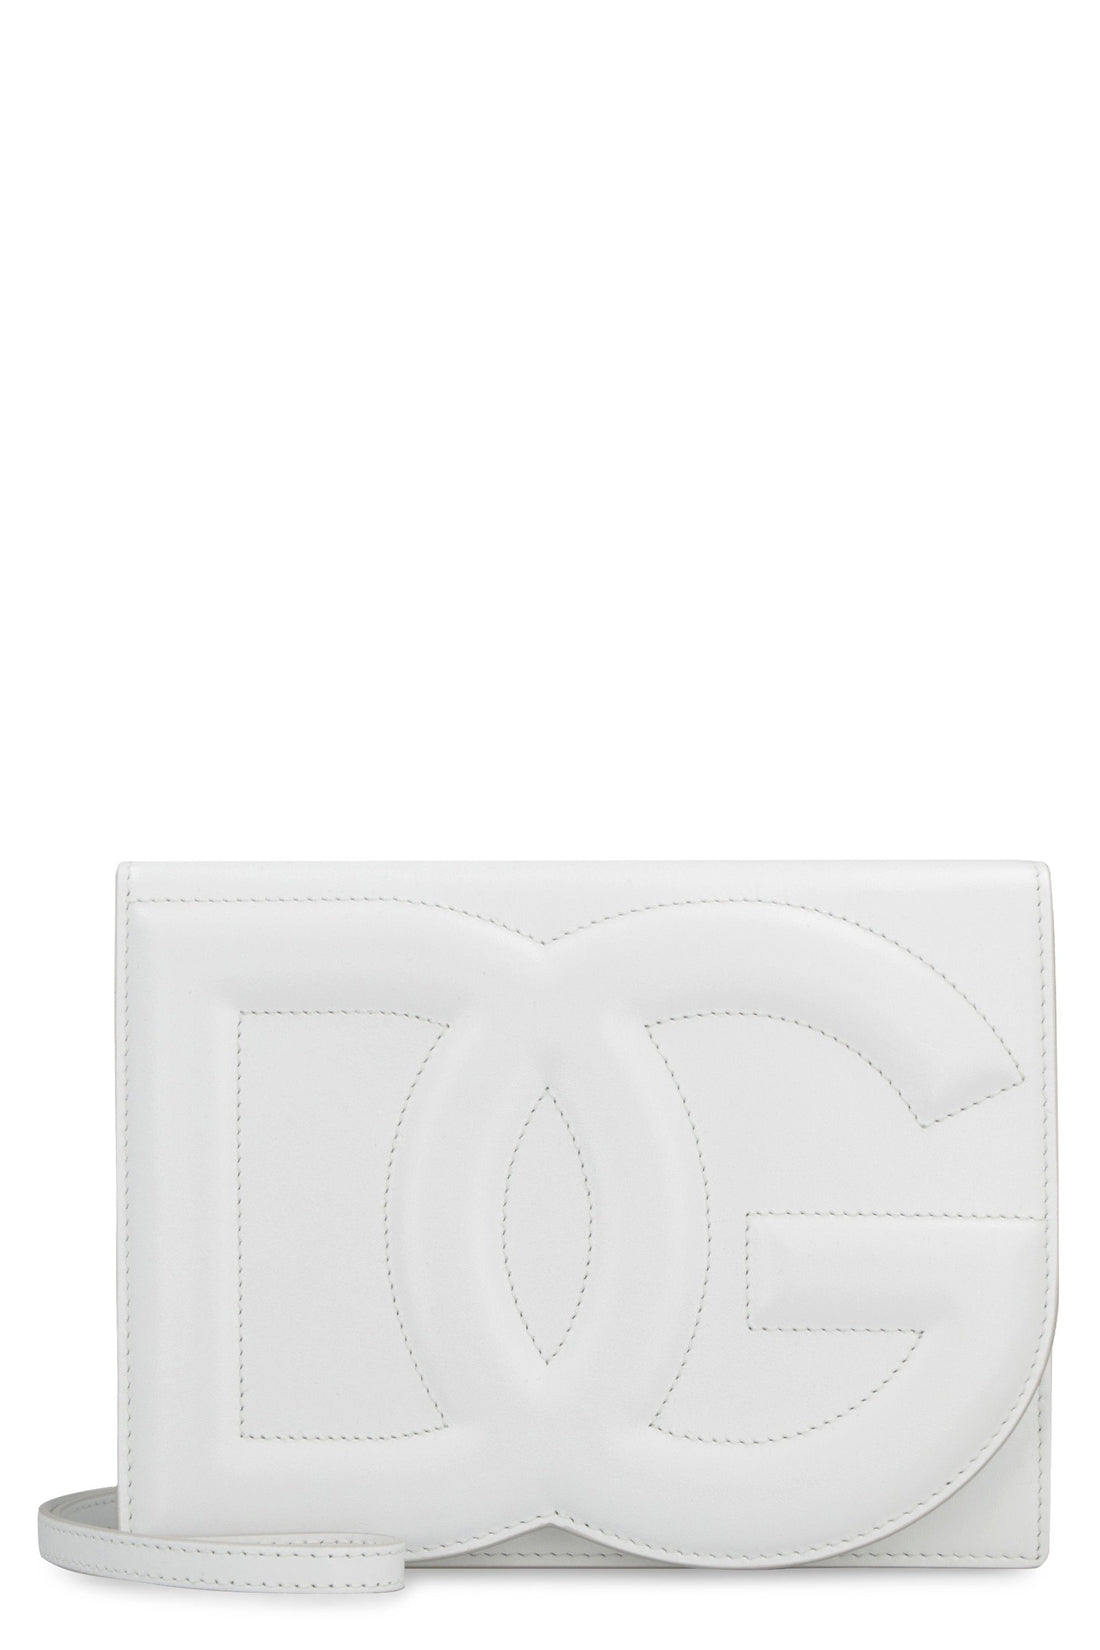 Dolce & Gabbana-OUTLET-SALE-DG Logo leather crossbody bag-ARCHIVIST